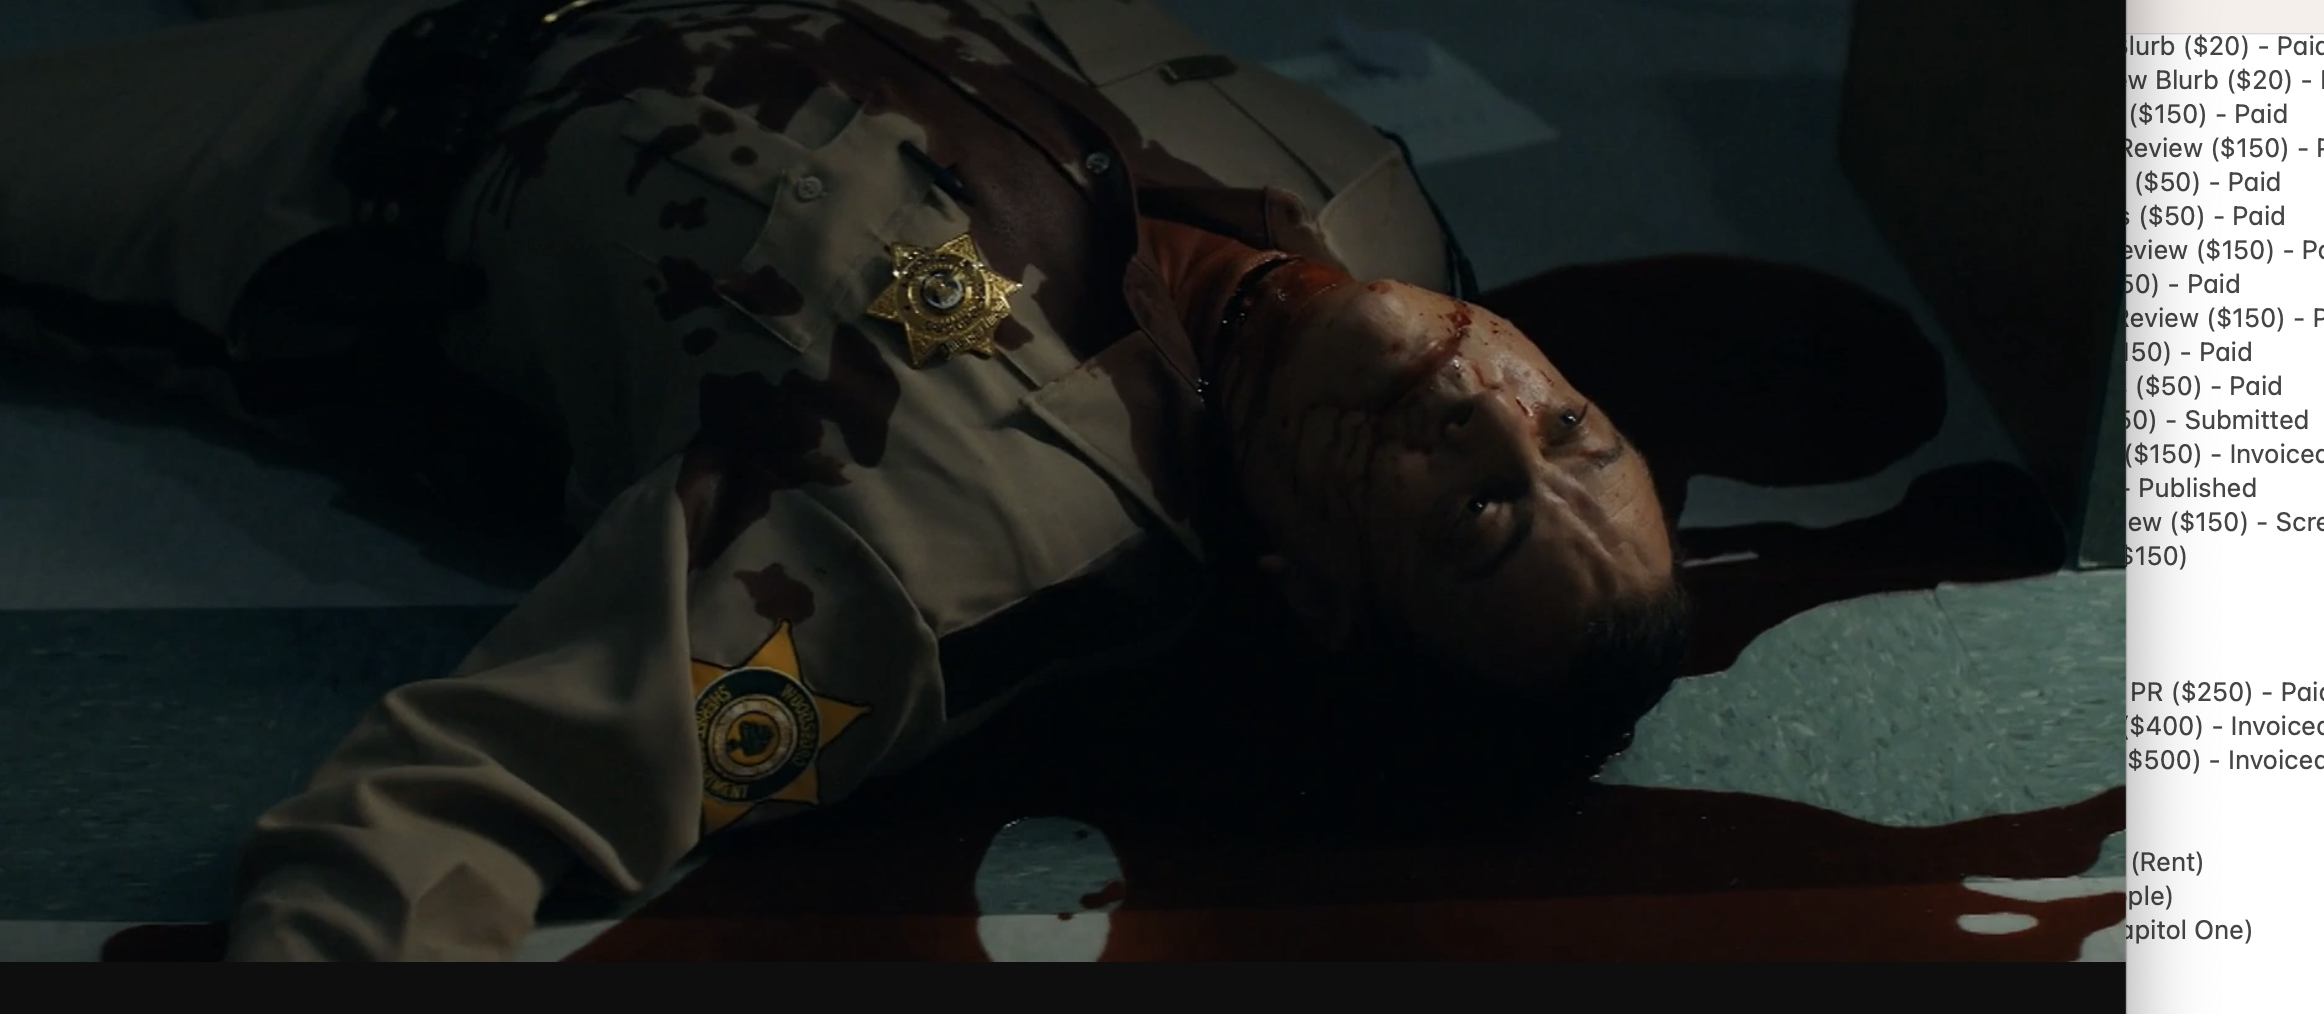 A deputy lies bleeding on the floor